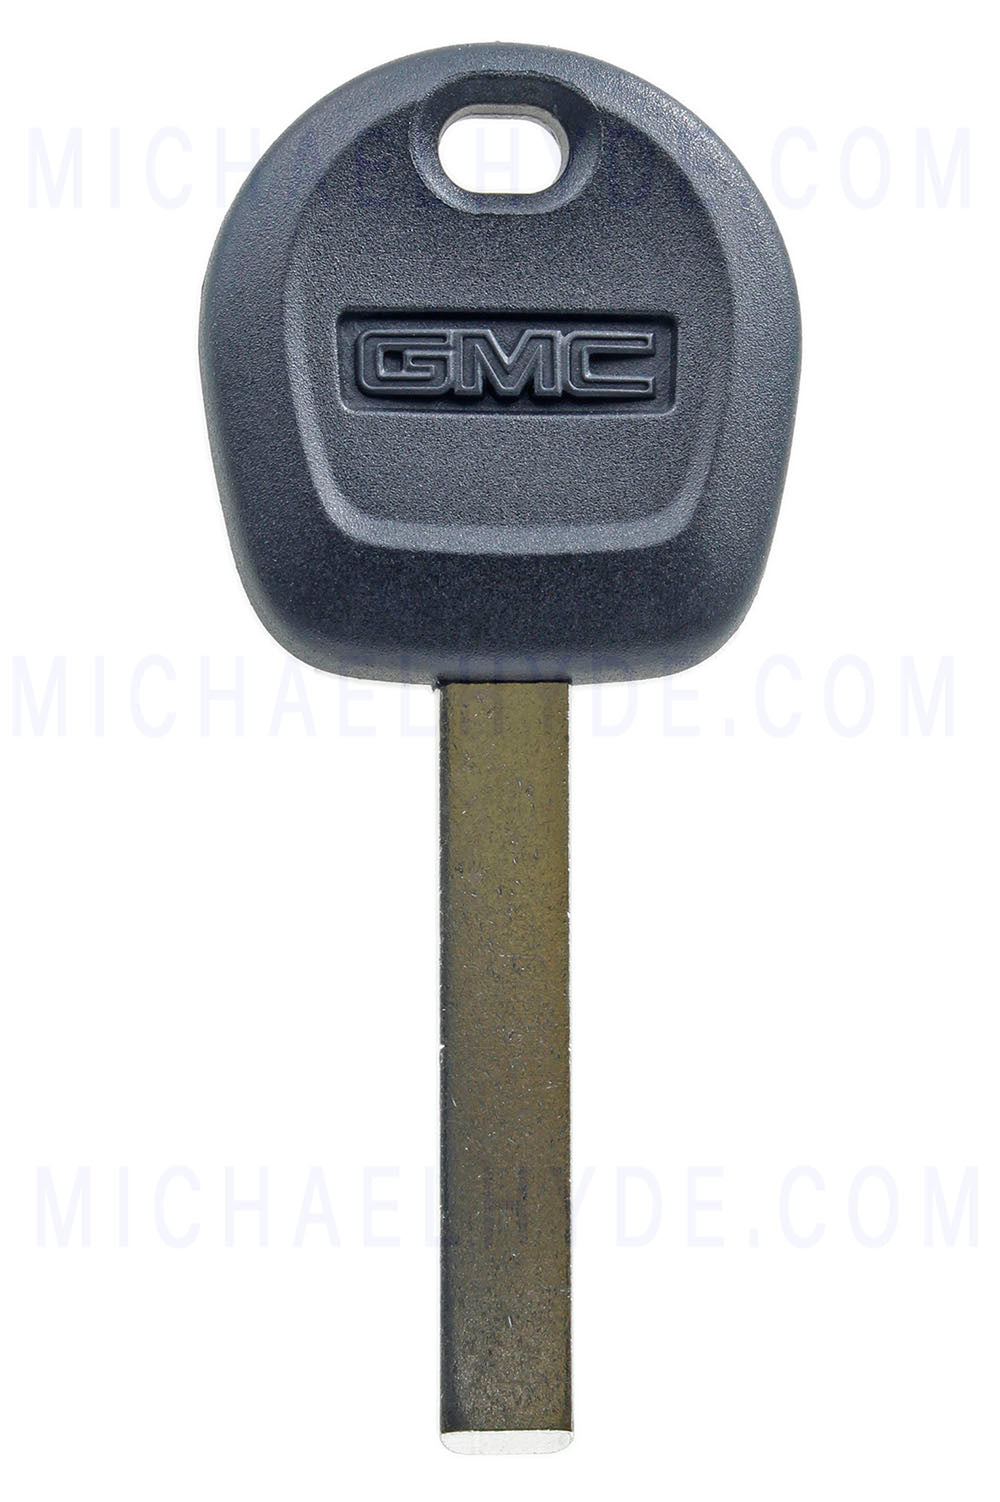 Strattec 5934960 - GMC Logo 10 Cut High Security Key - OE# 13520355 - 2015+ GMC Canyon - Oval Head